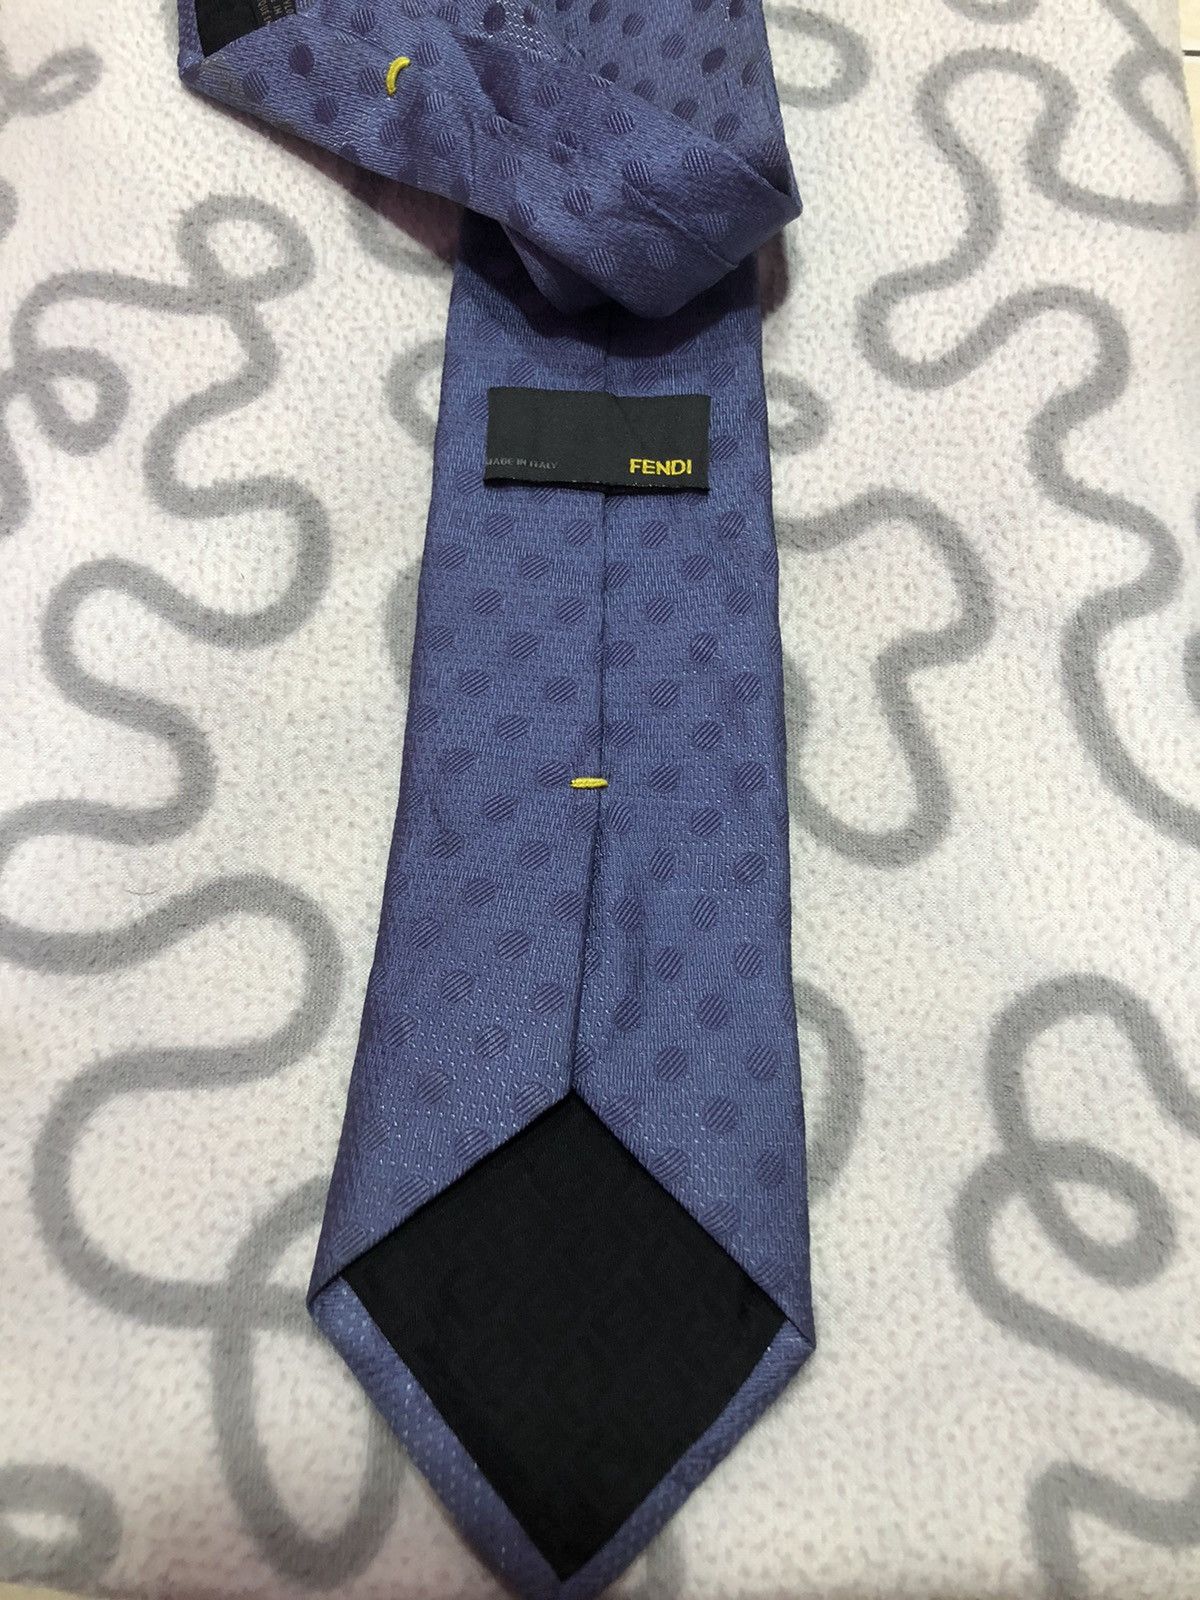 Authentic Fendi Monogram Neck Tie Made Italy - 2